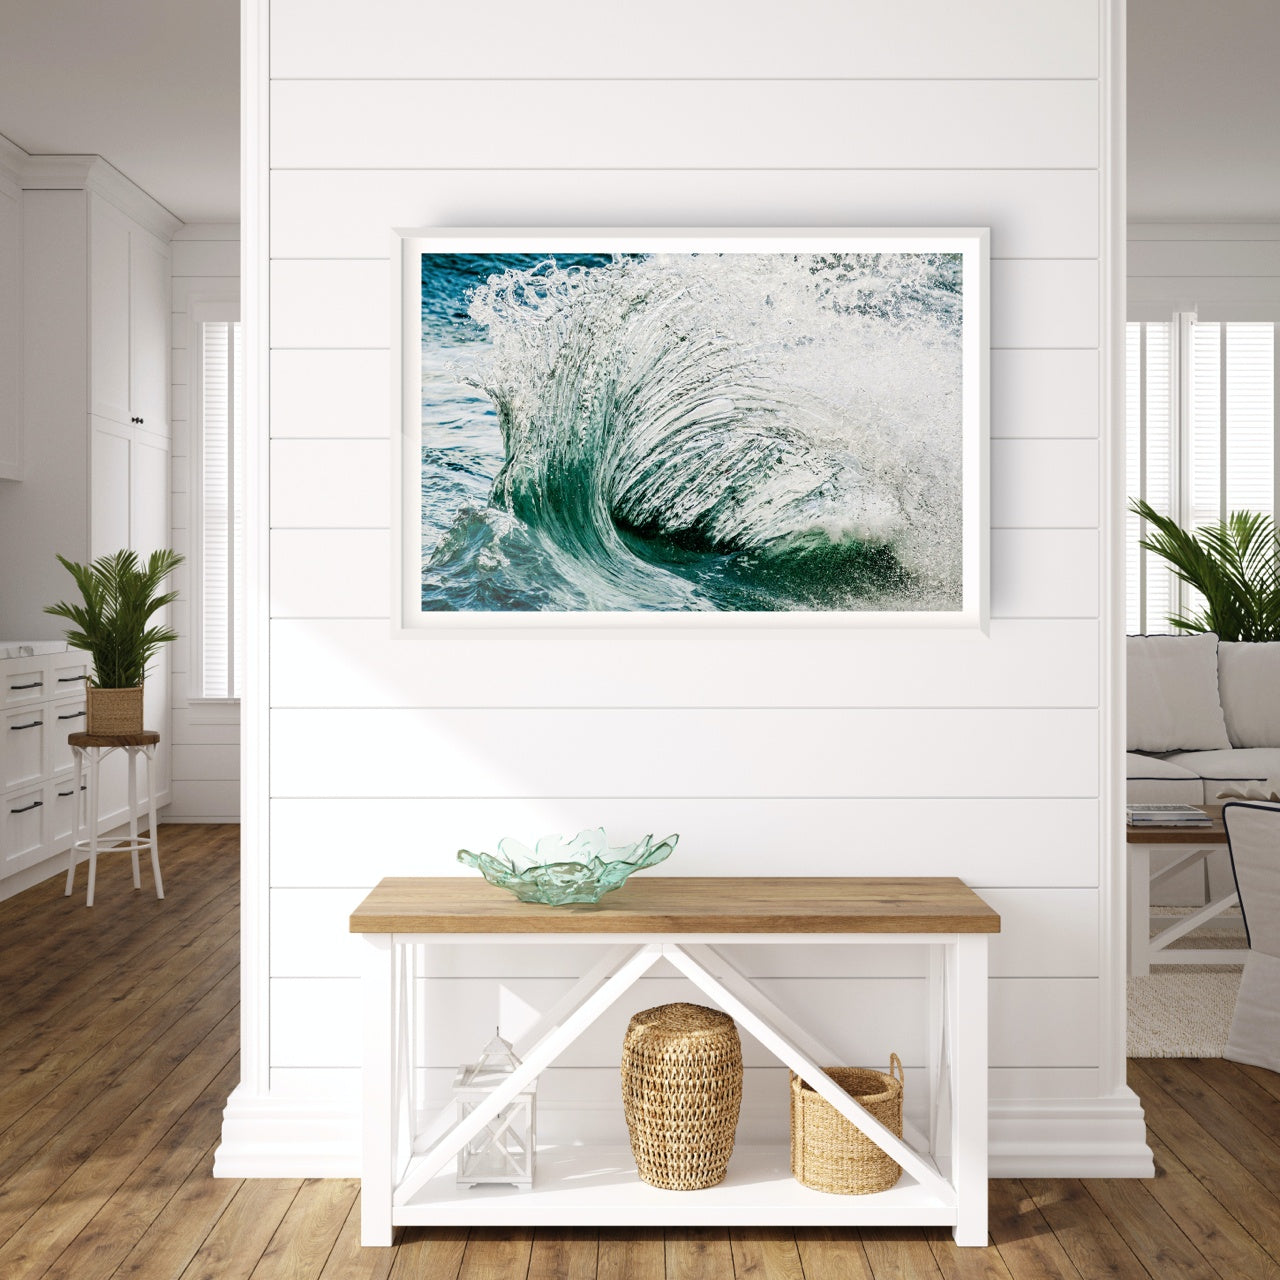 Fine Art Prints - "Sea Glass" | Ocean Photo Art